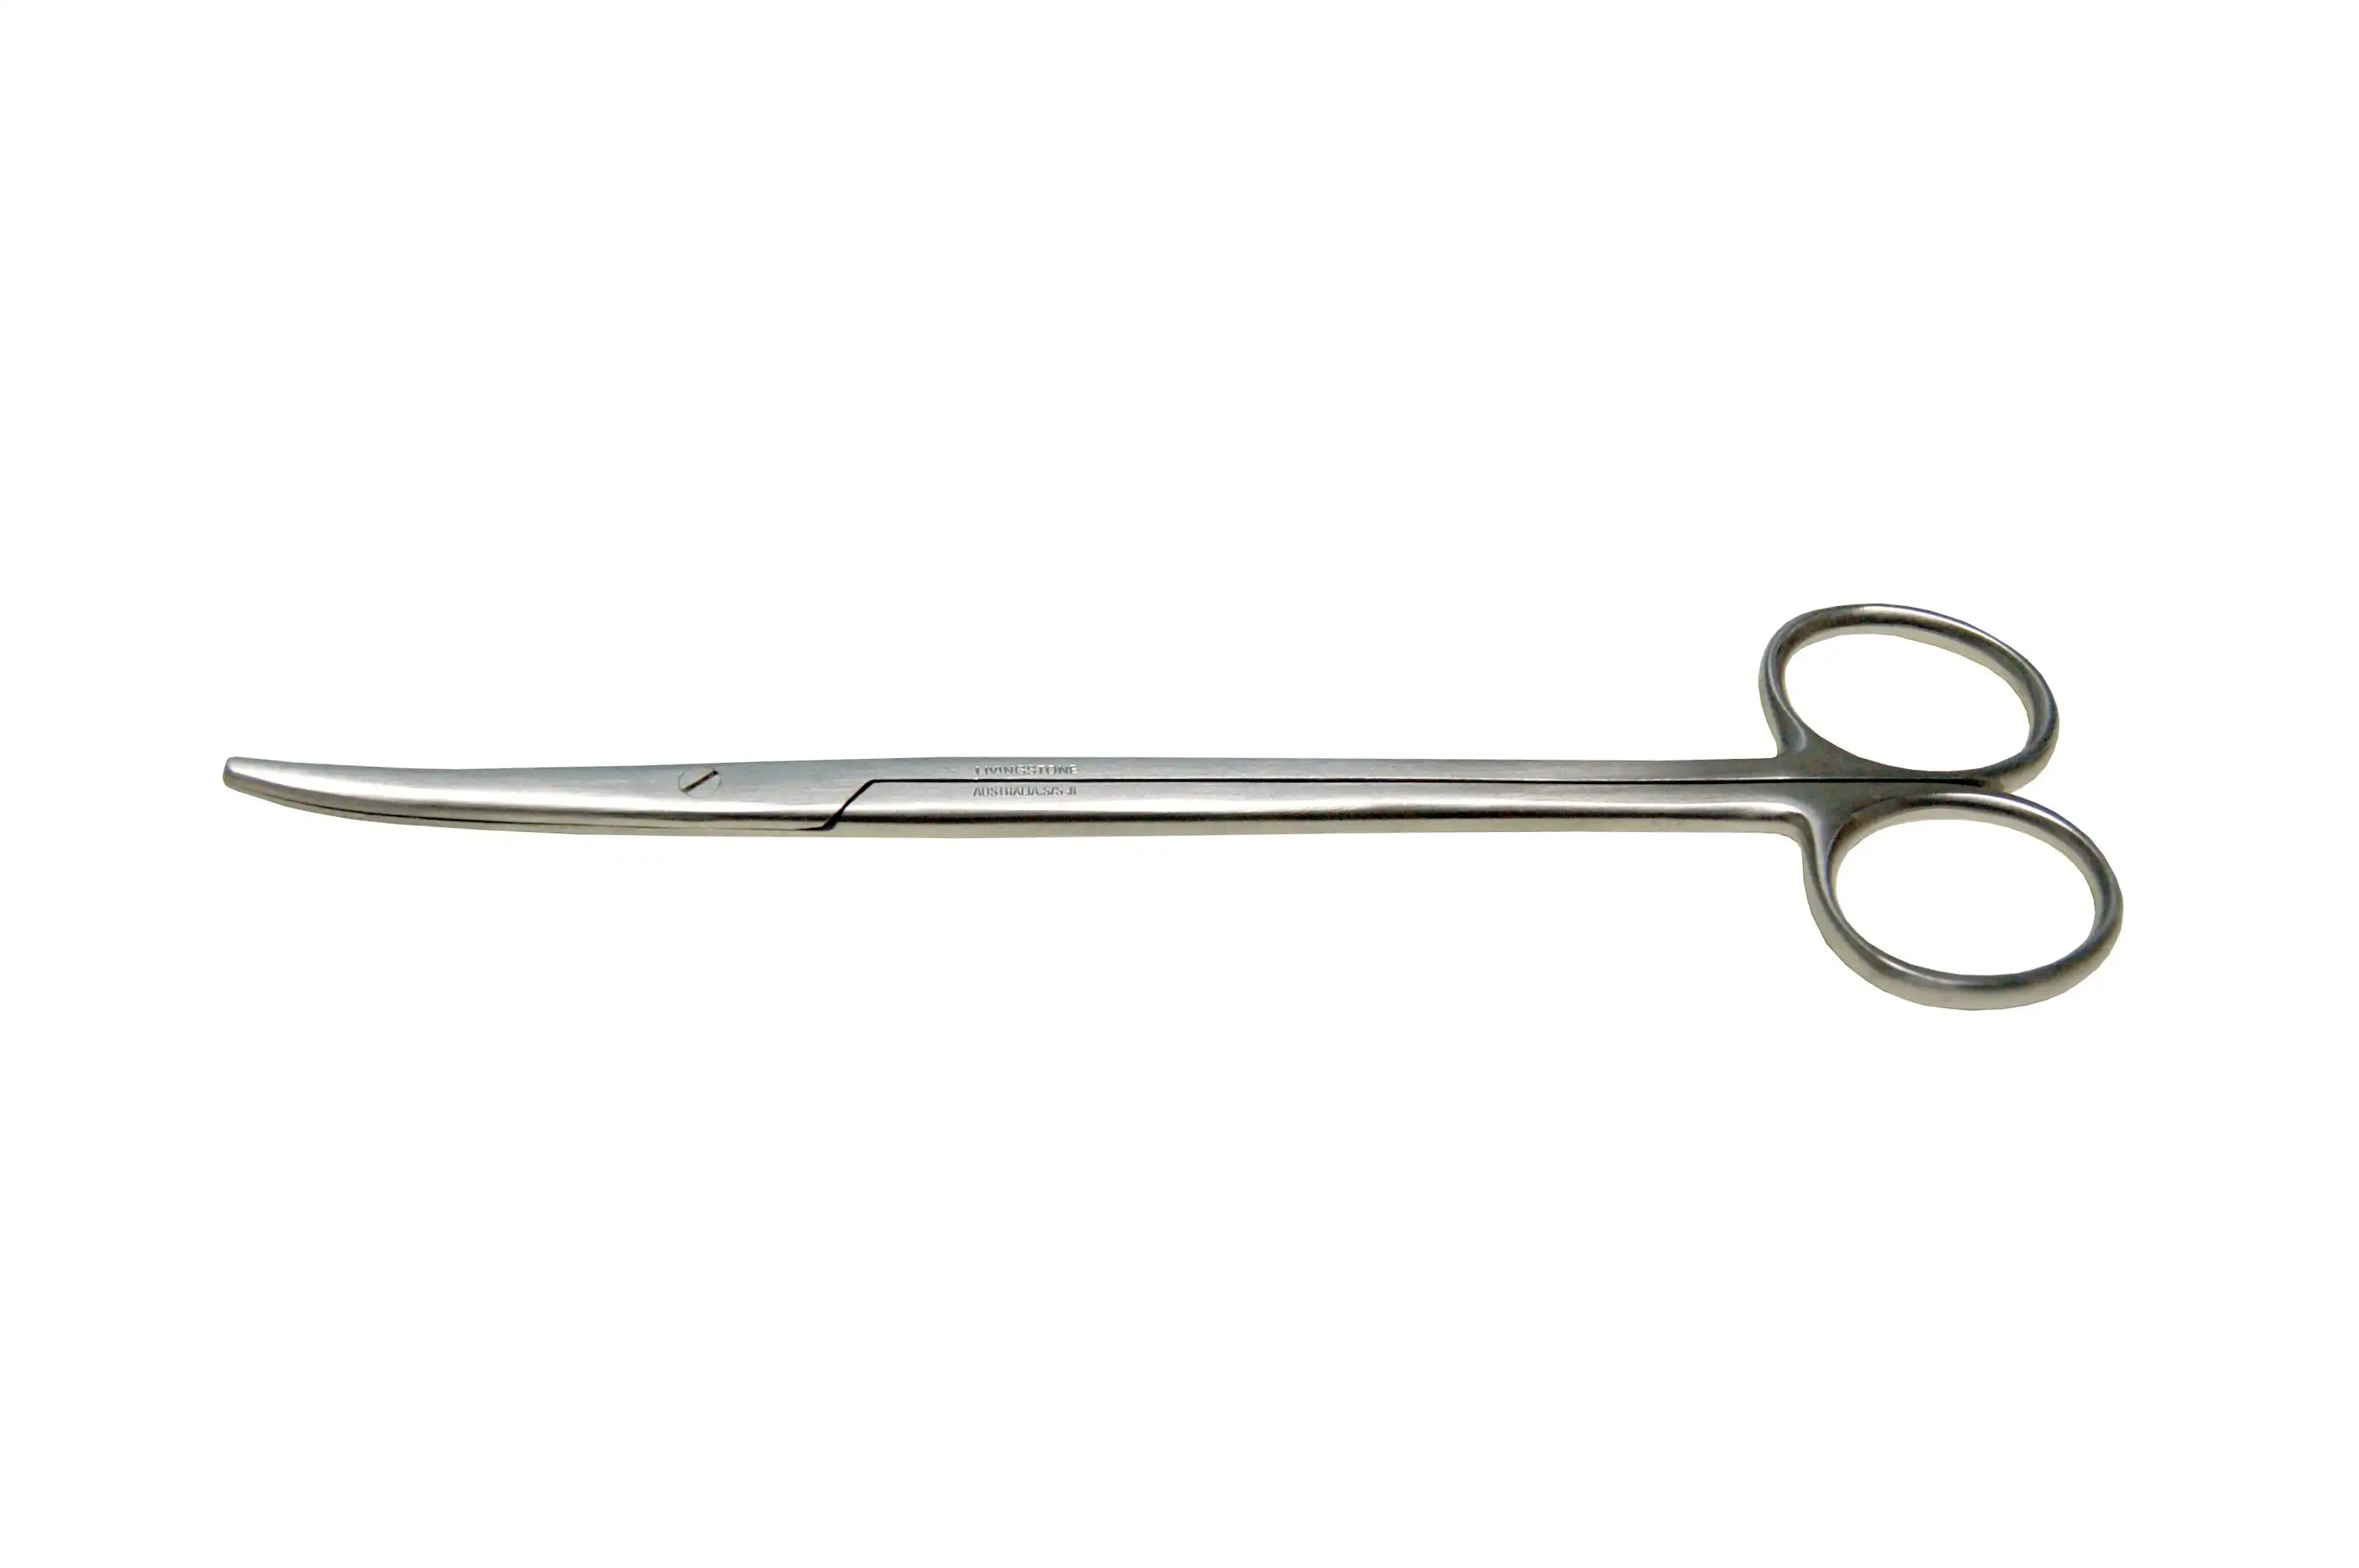 Perfect Metzenbaum Scissors 18cm 46 grams Curved Stainless Steel Theatre Quality